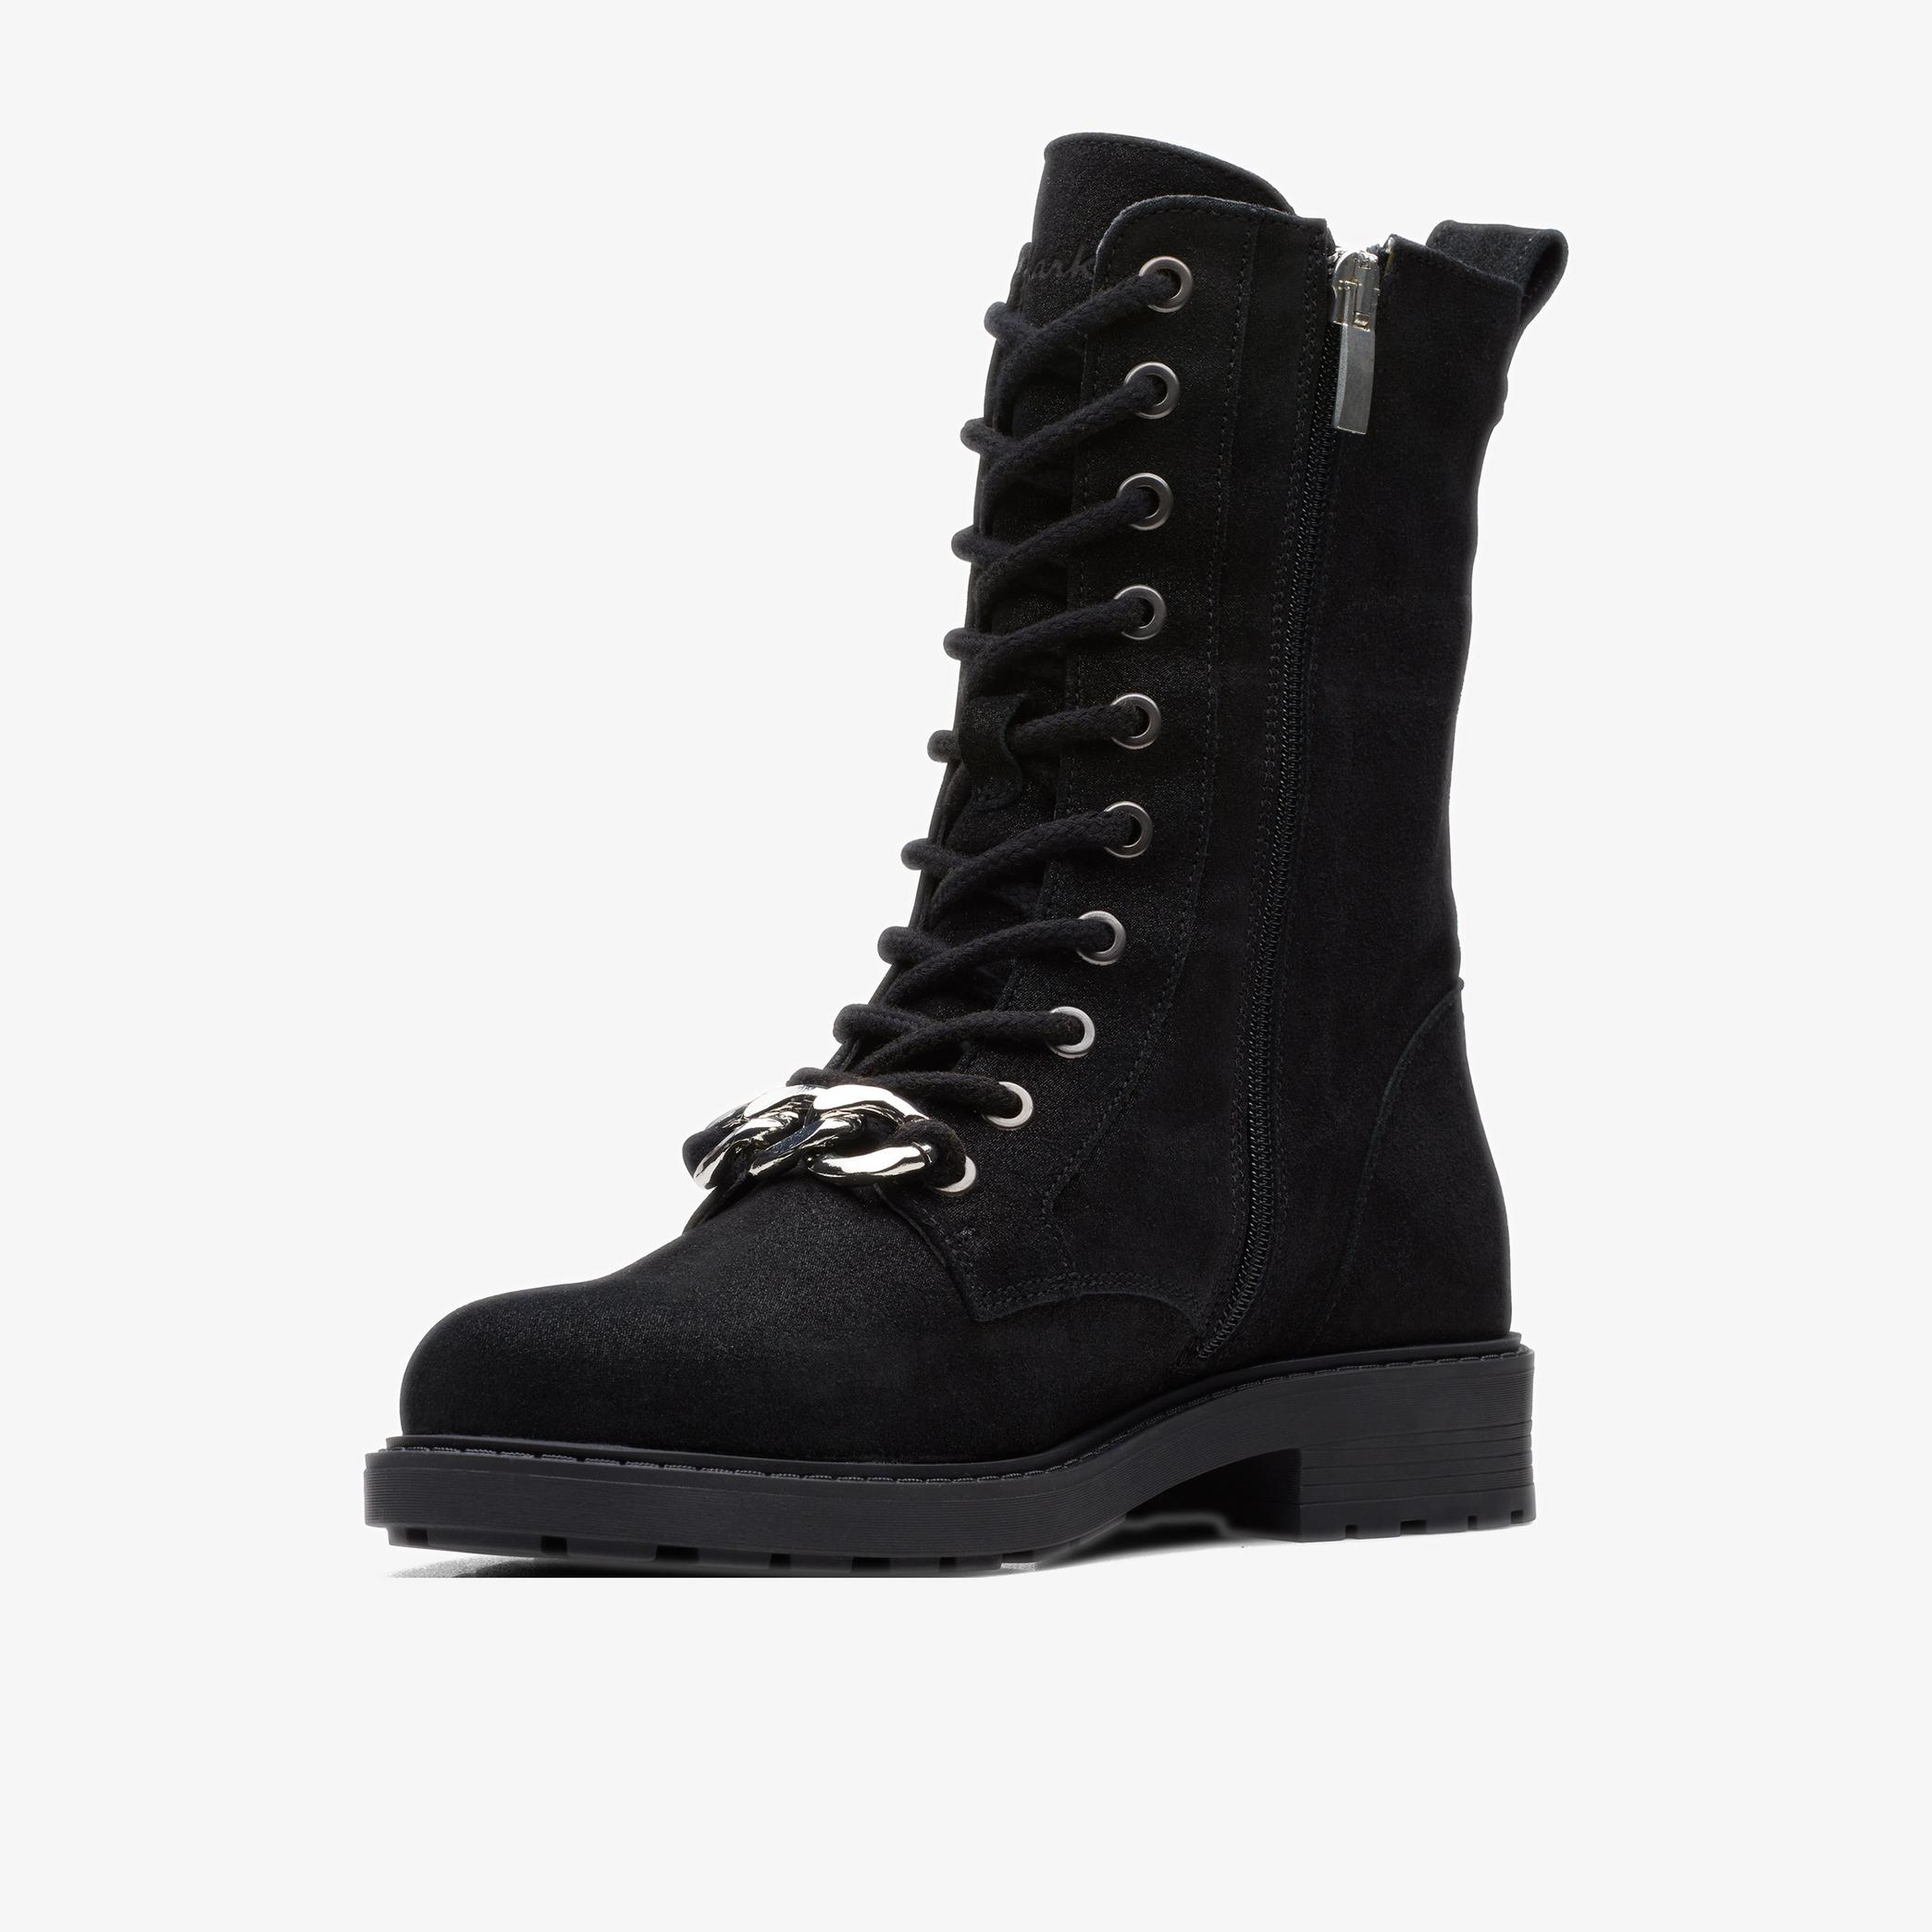 Orinoco2 Style Black Metallic Ankle Boots, view 4 of 6